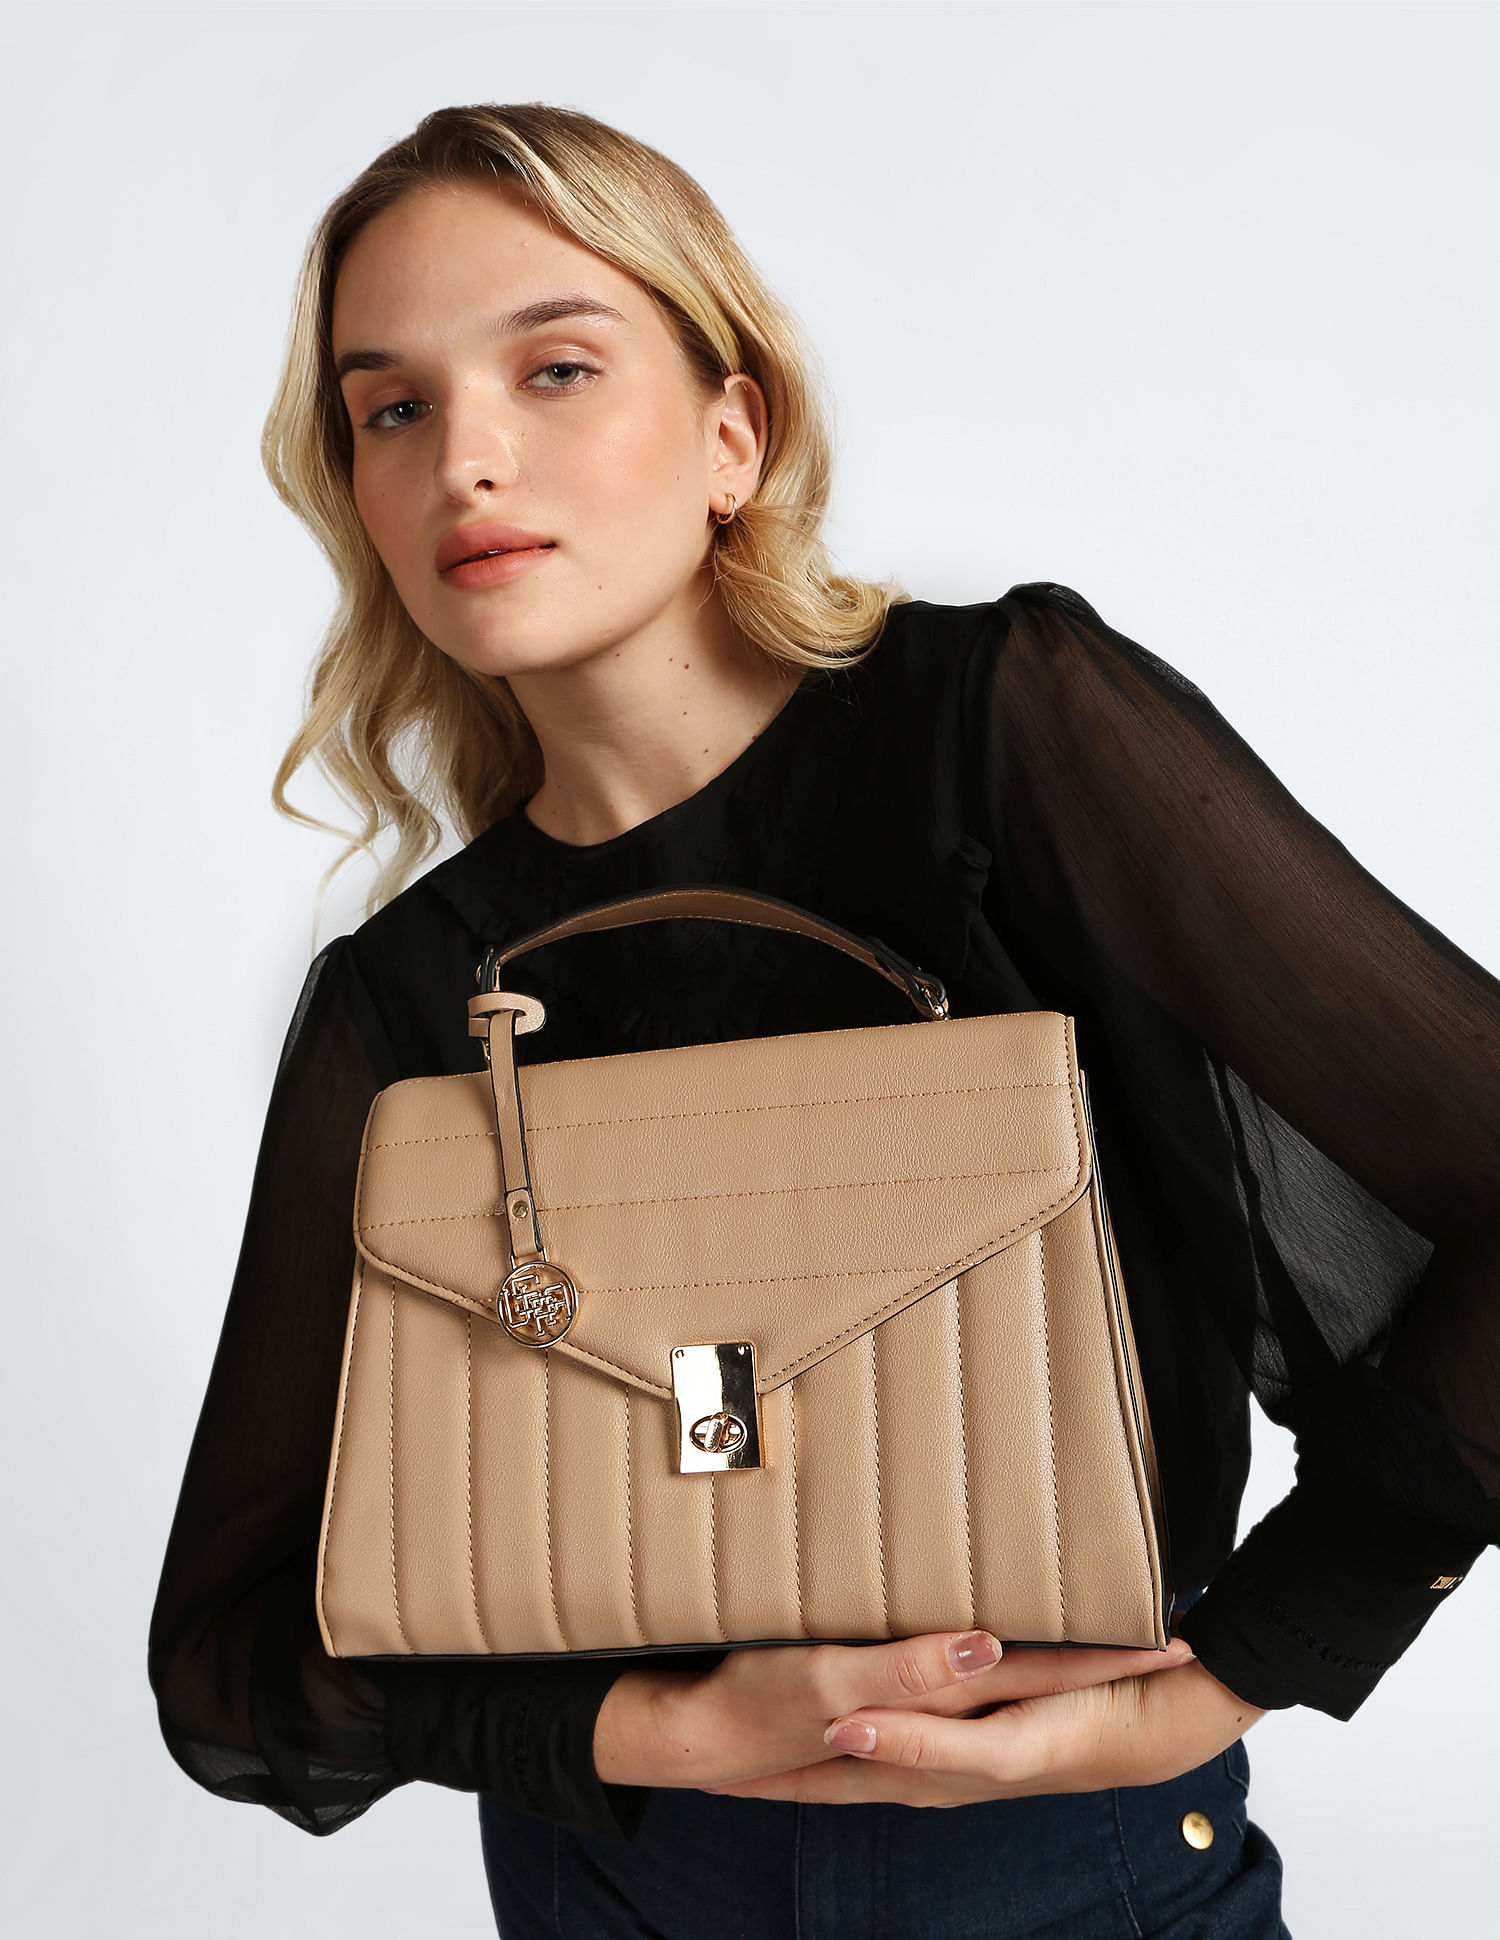 Women’s satchel bag – Stylish Women’s Accessories